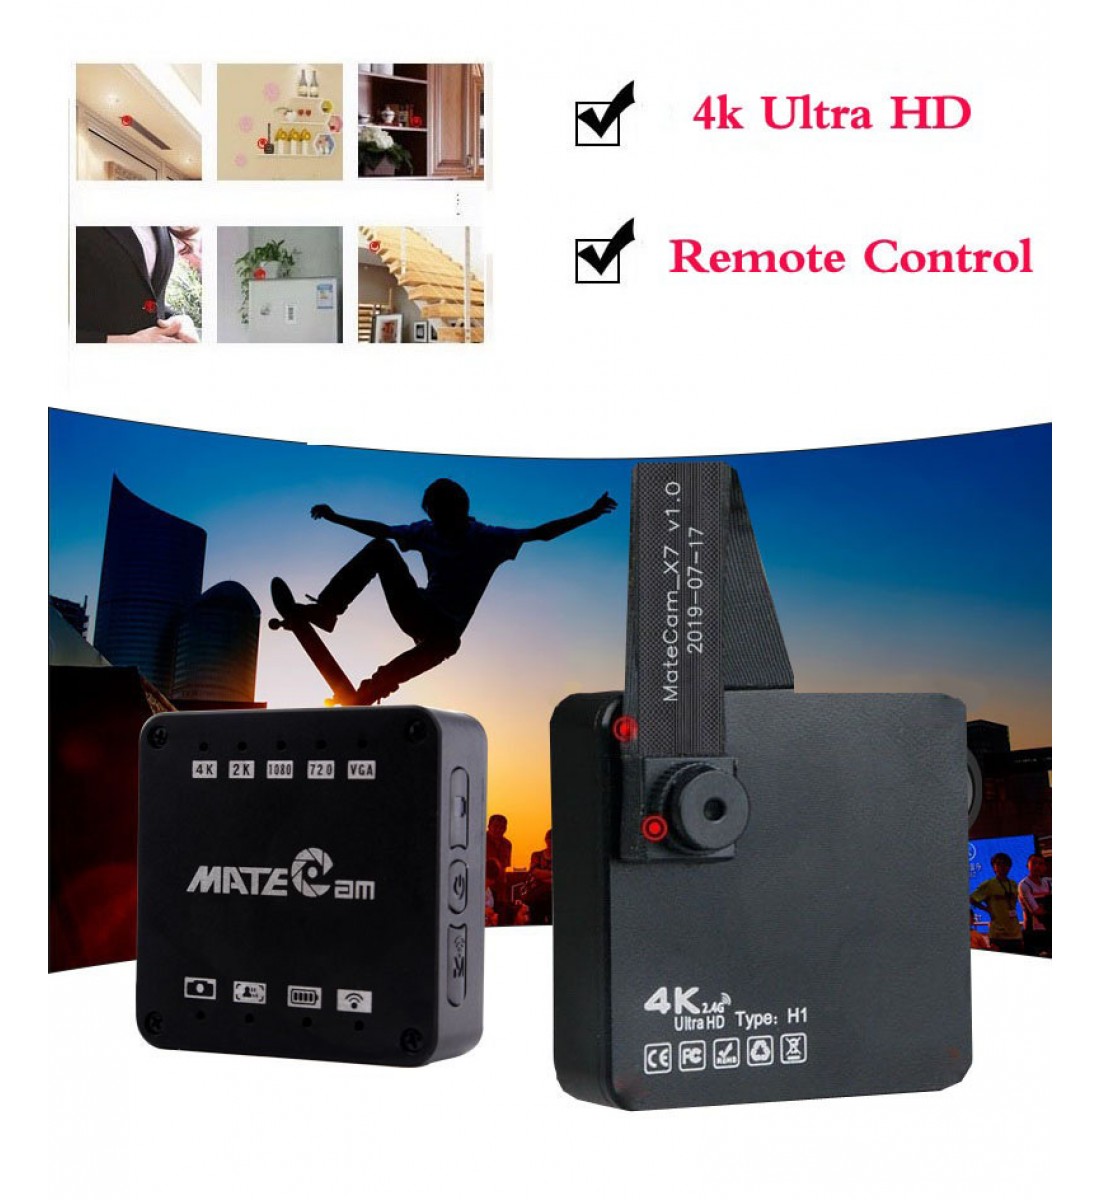 Wholesale 4K Unltra HD Spy Camera Wireless Hidden Camera with